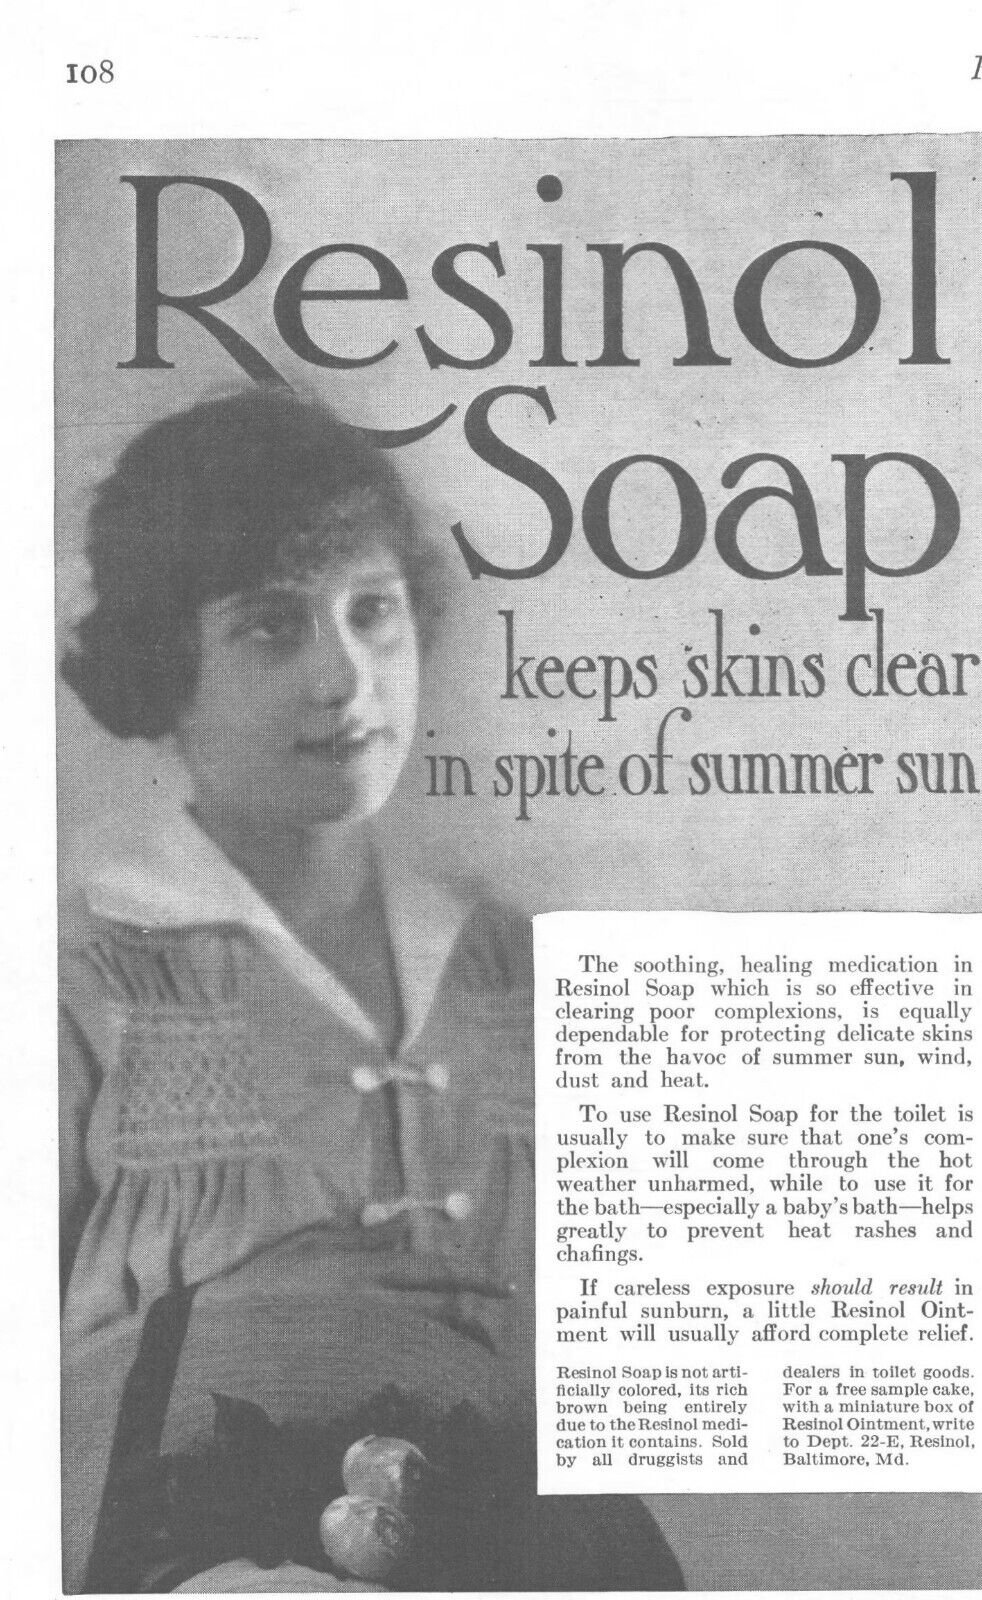 1916 Resinol Soap Antique Print Ad Keeps Skin Clear In Spite Of Summer Sun